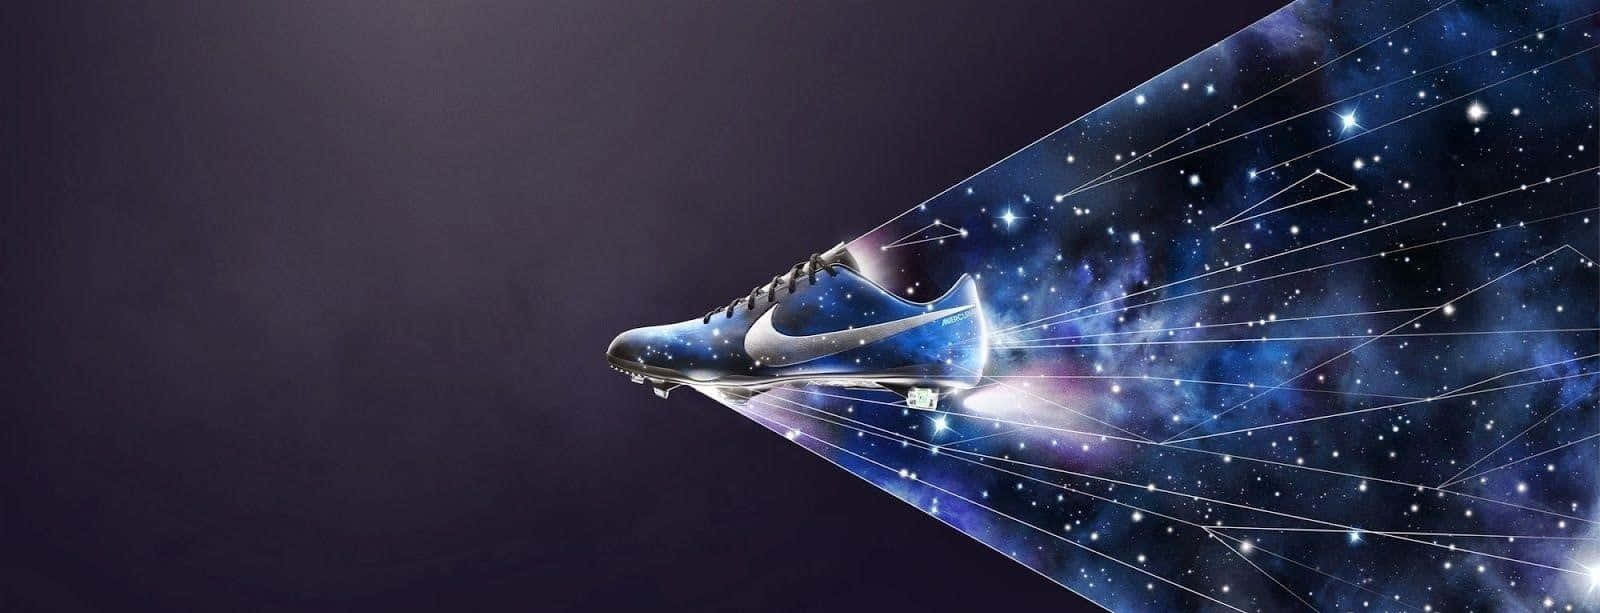 Mercurialvapor Nike Galaxig Abstrakt Design. Wallpaper